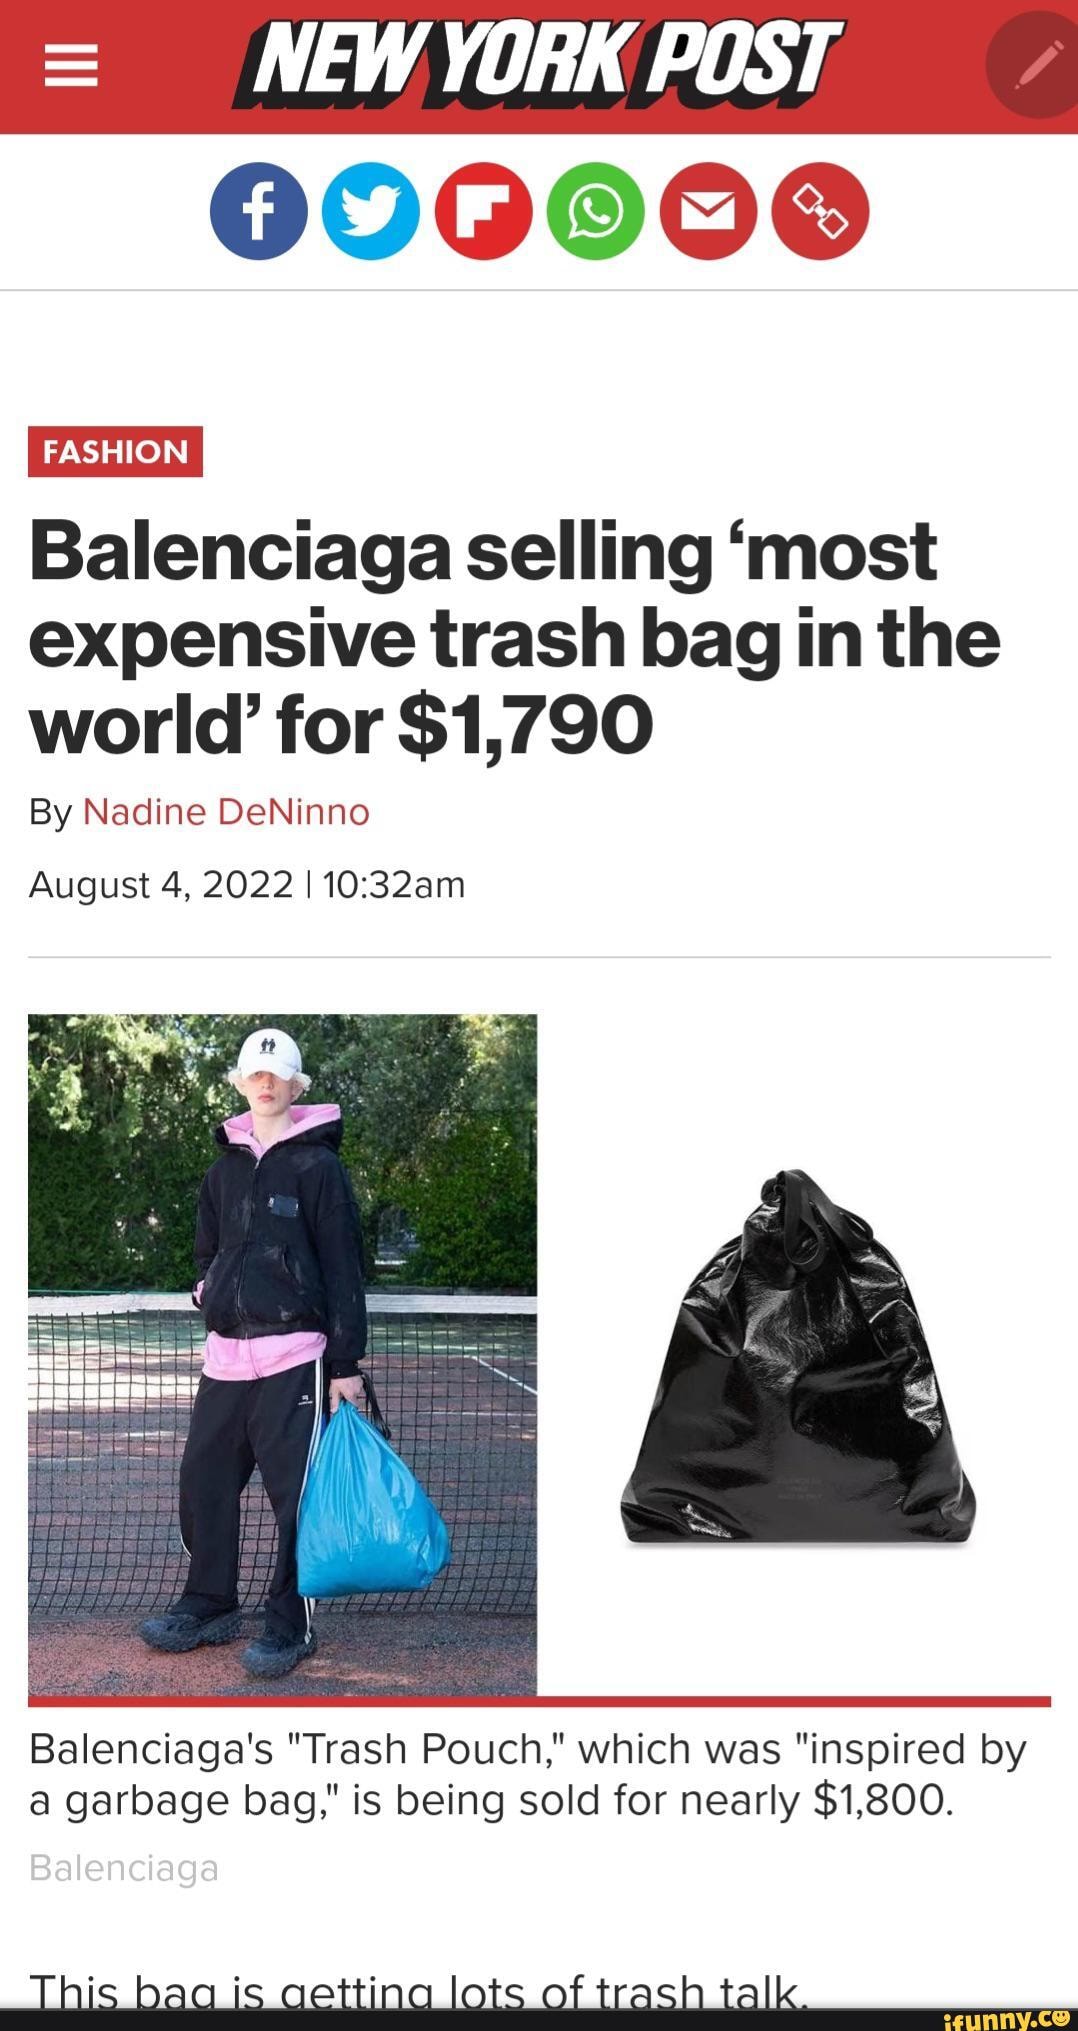 090000 FASHION I Balenciaga selling 'most expensive trash bag in